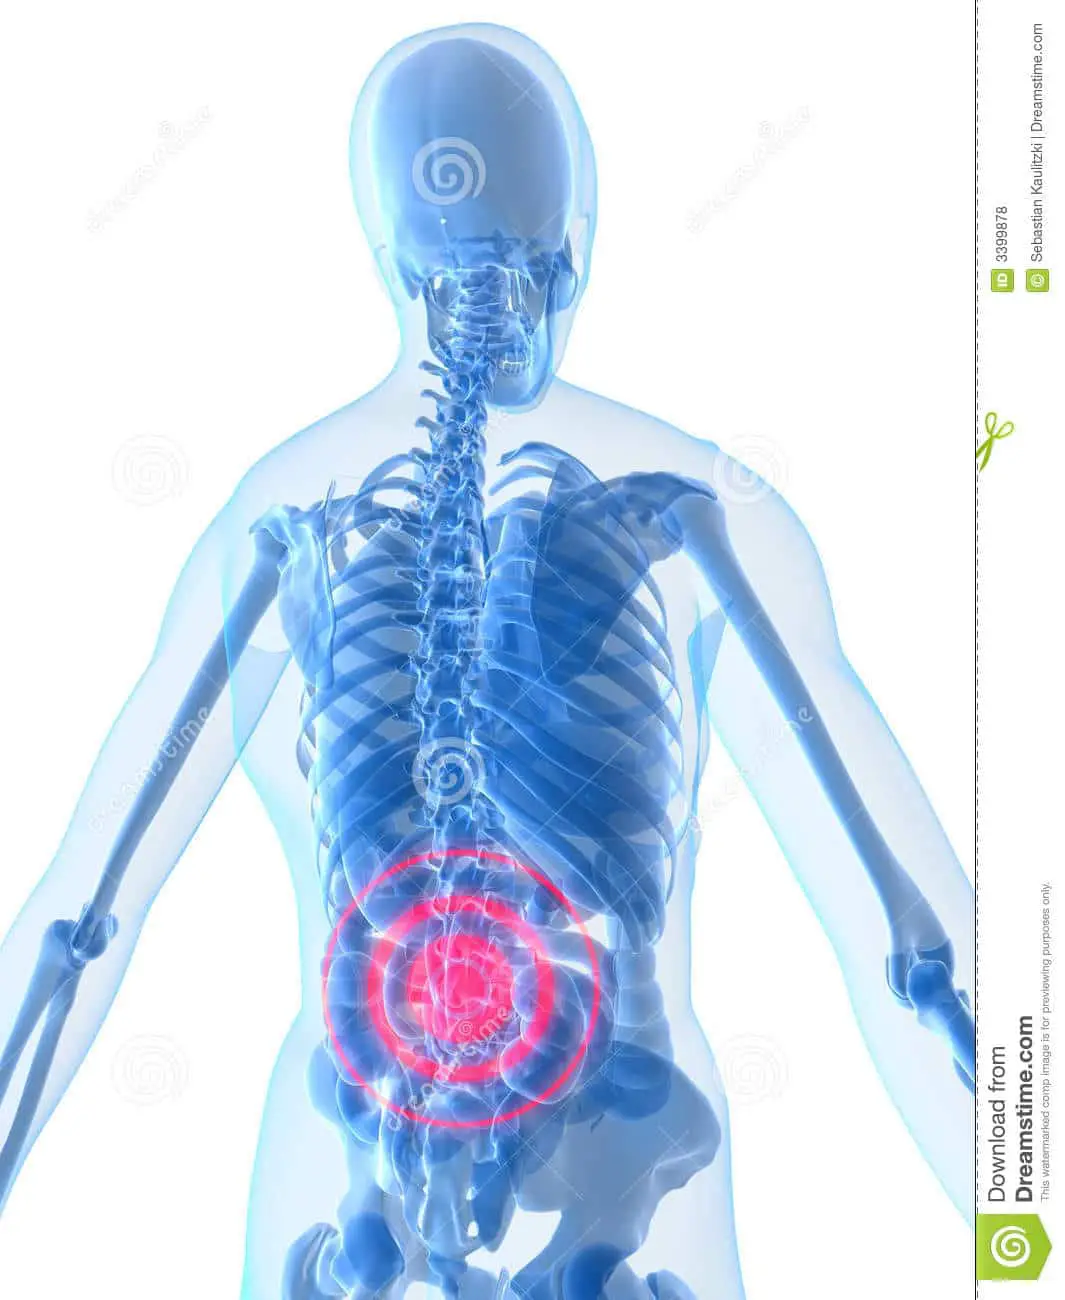 Lower back inflammation stock illustration. Illustration of spine